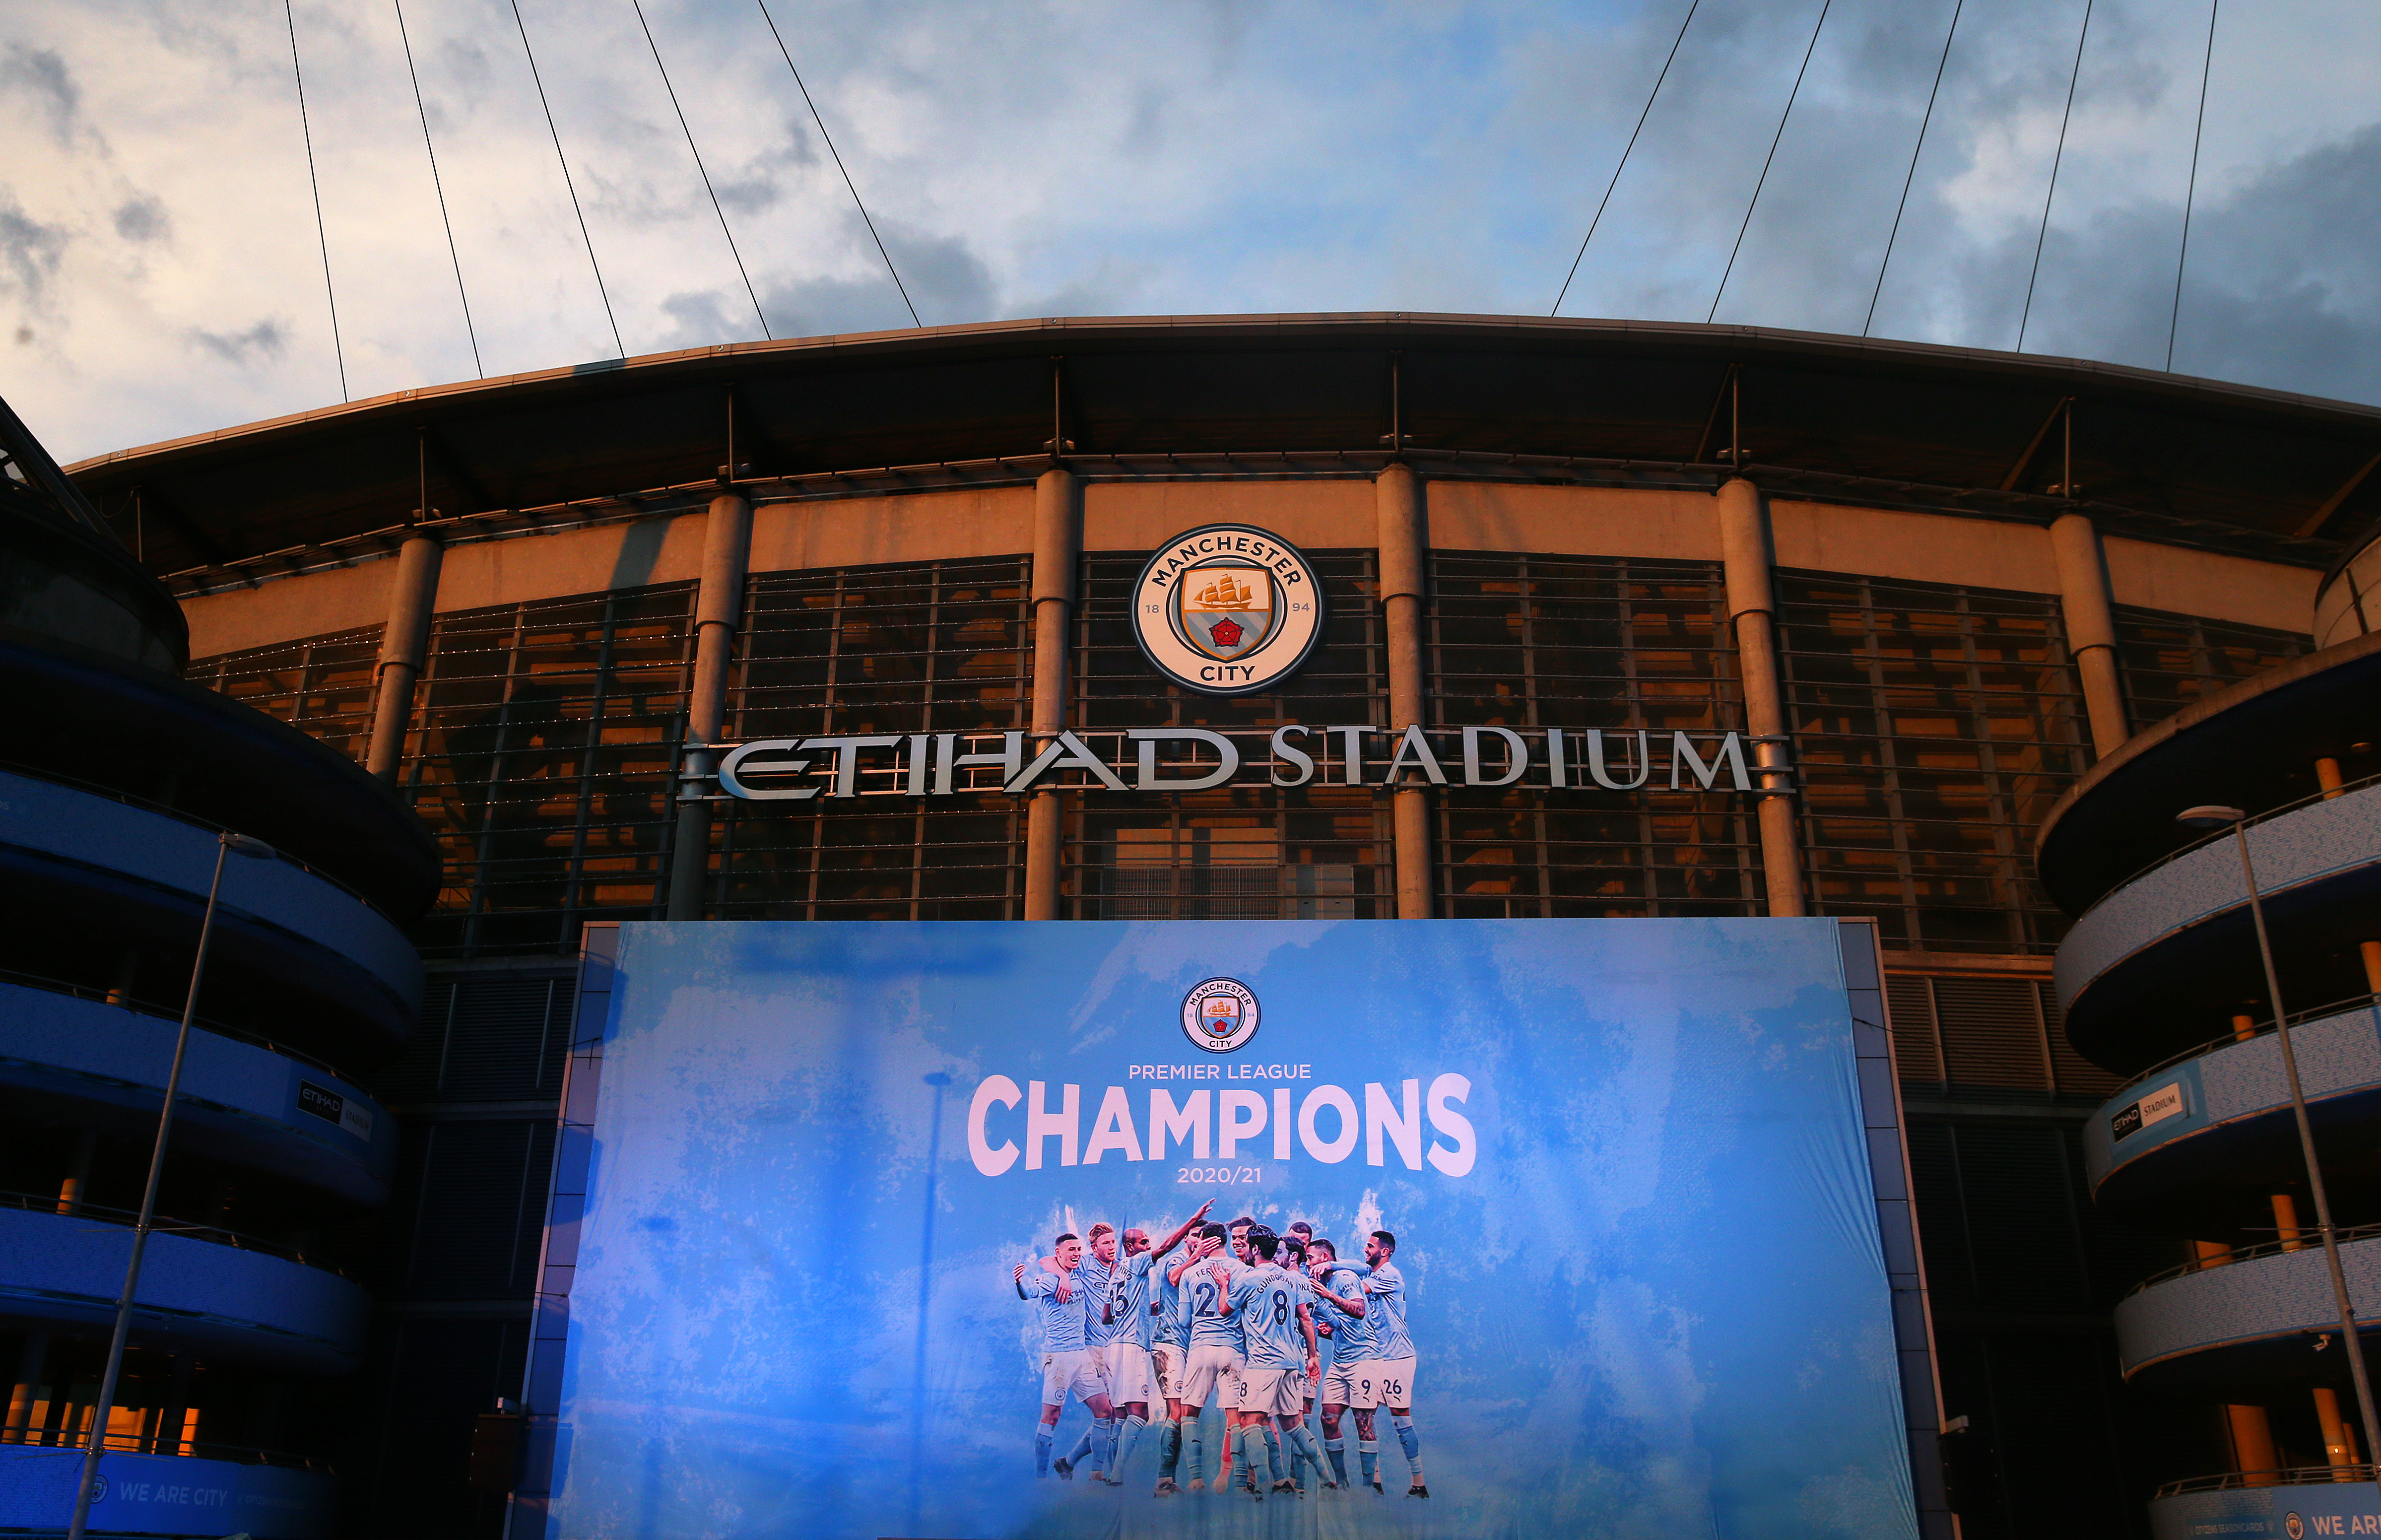 Champions banner is seen outside Etihad Stadium - Manchester City - Premier League